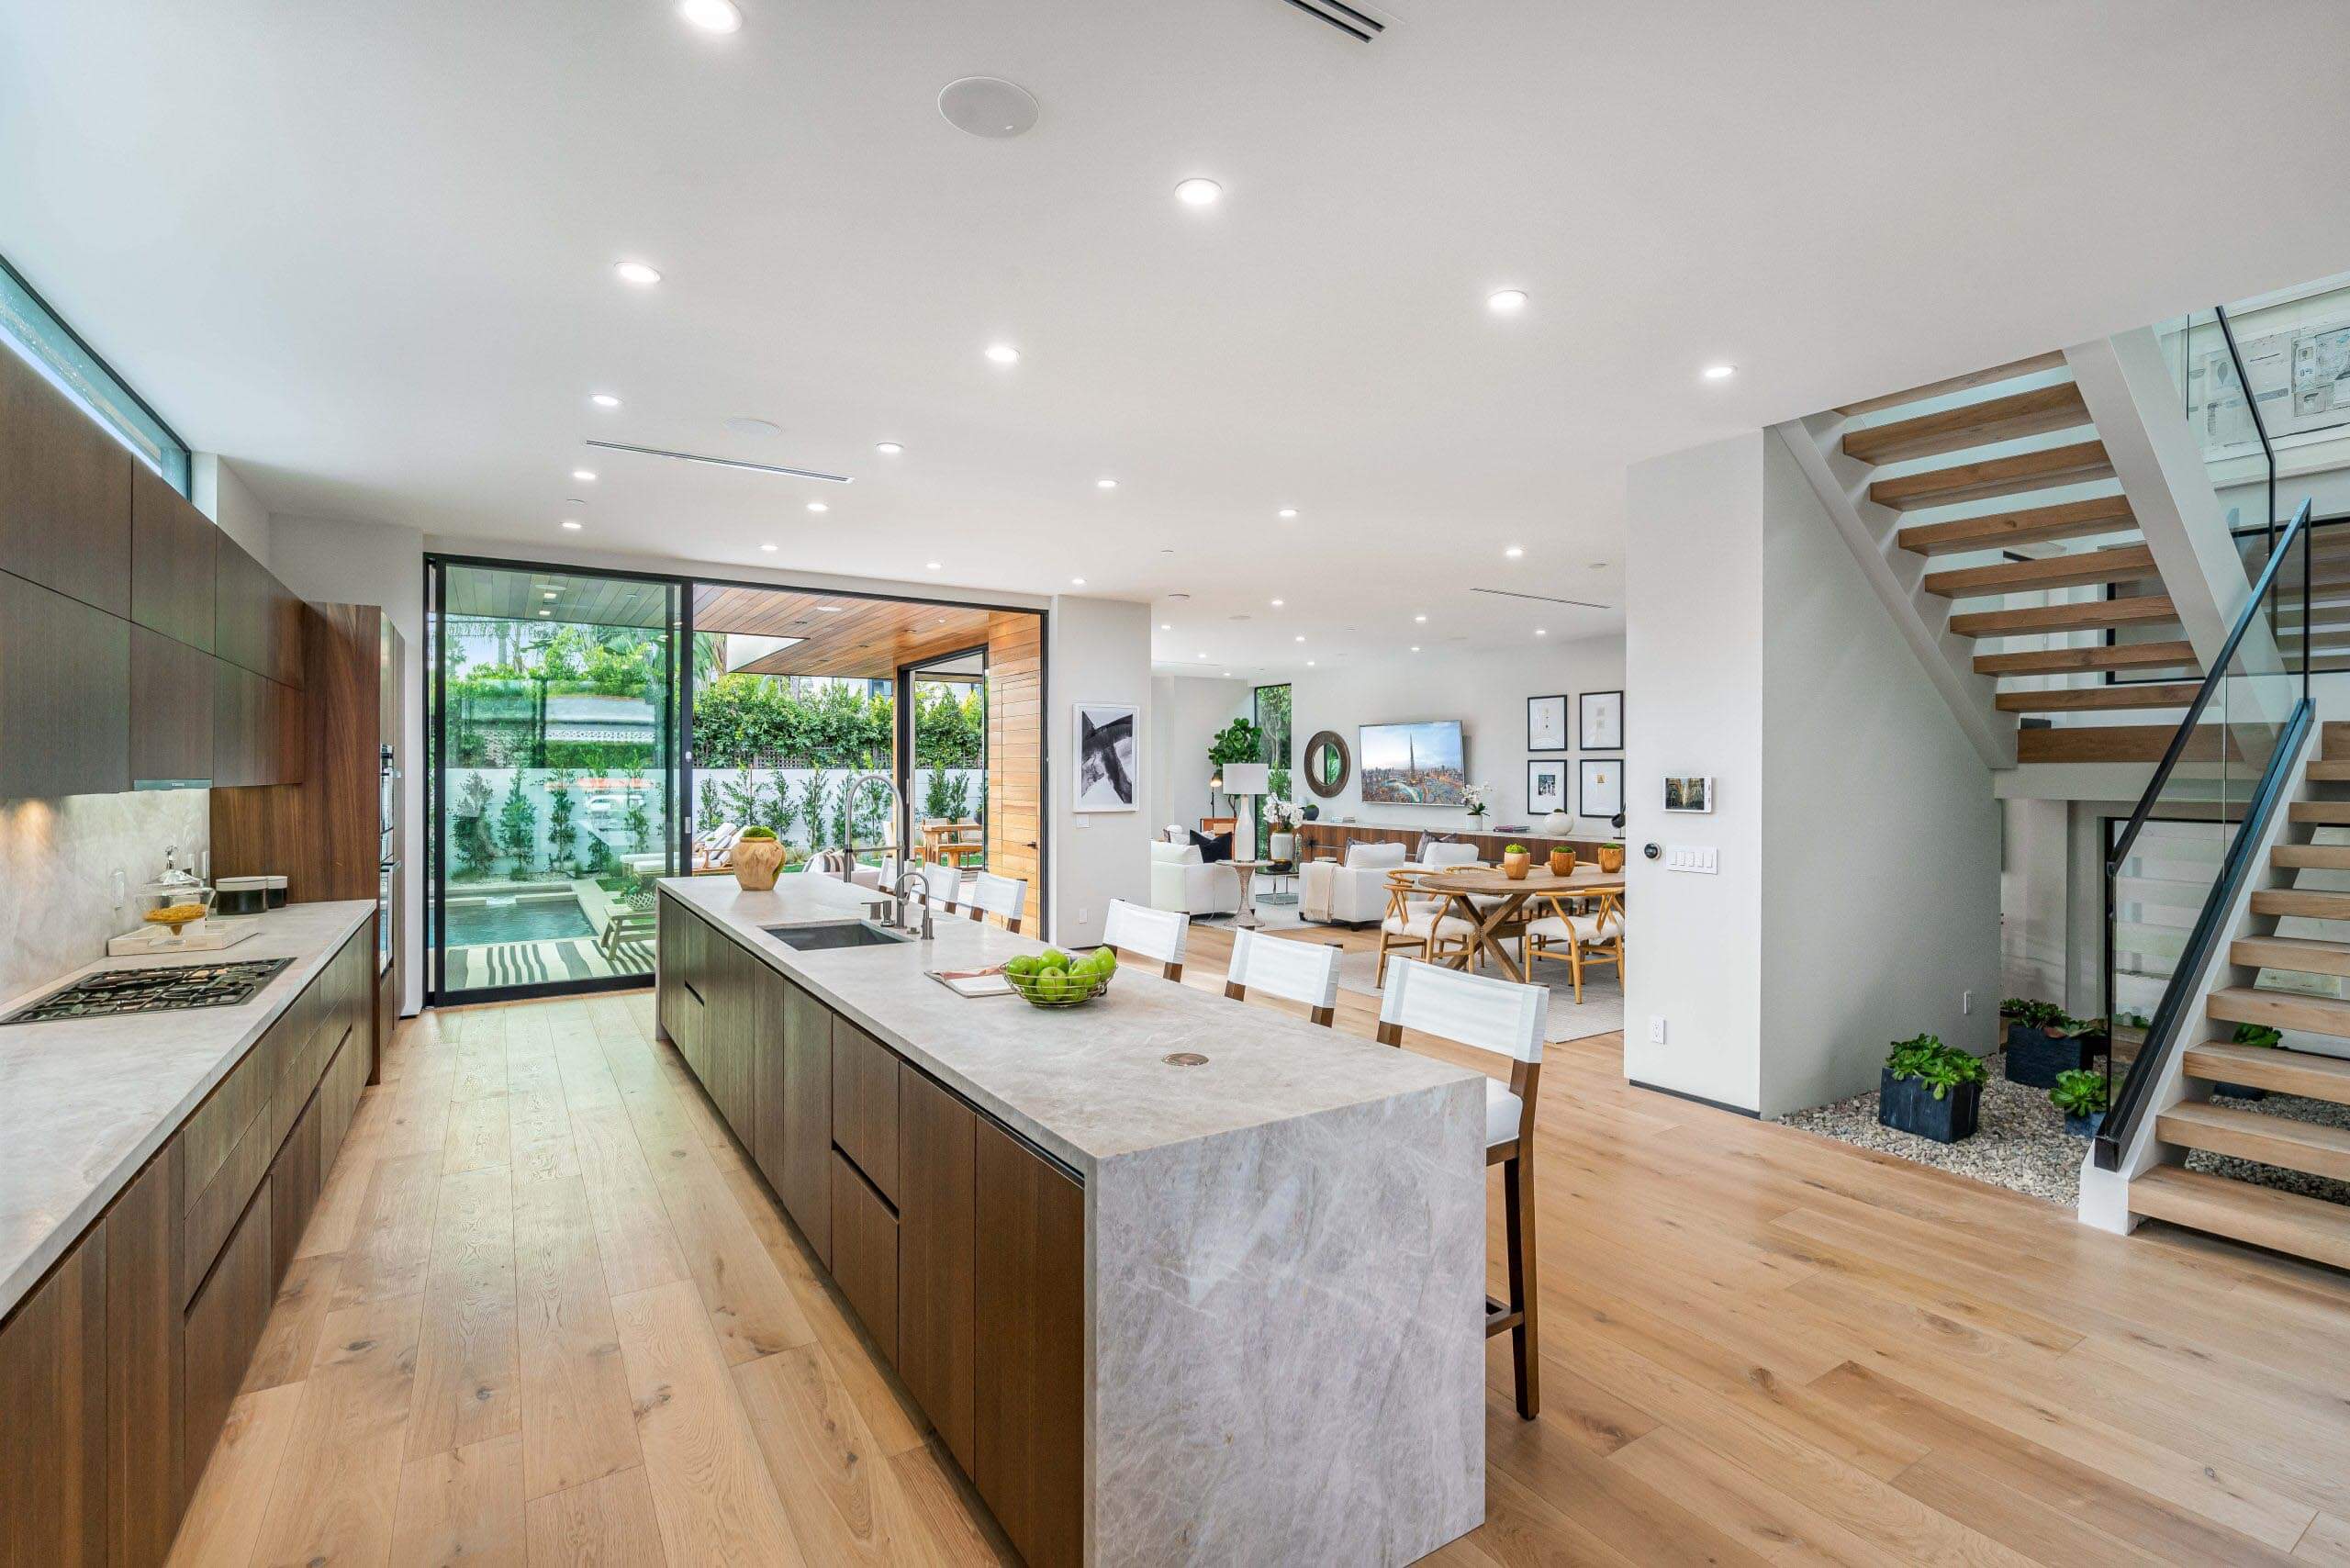 Chrissy Teigen And John Legend - celebrity kitchen design